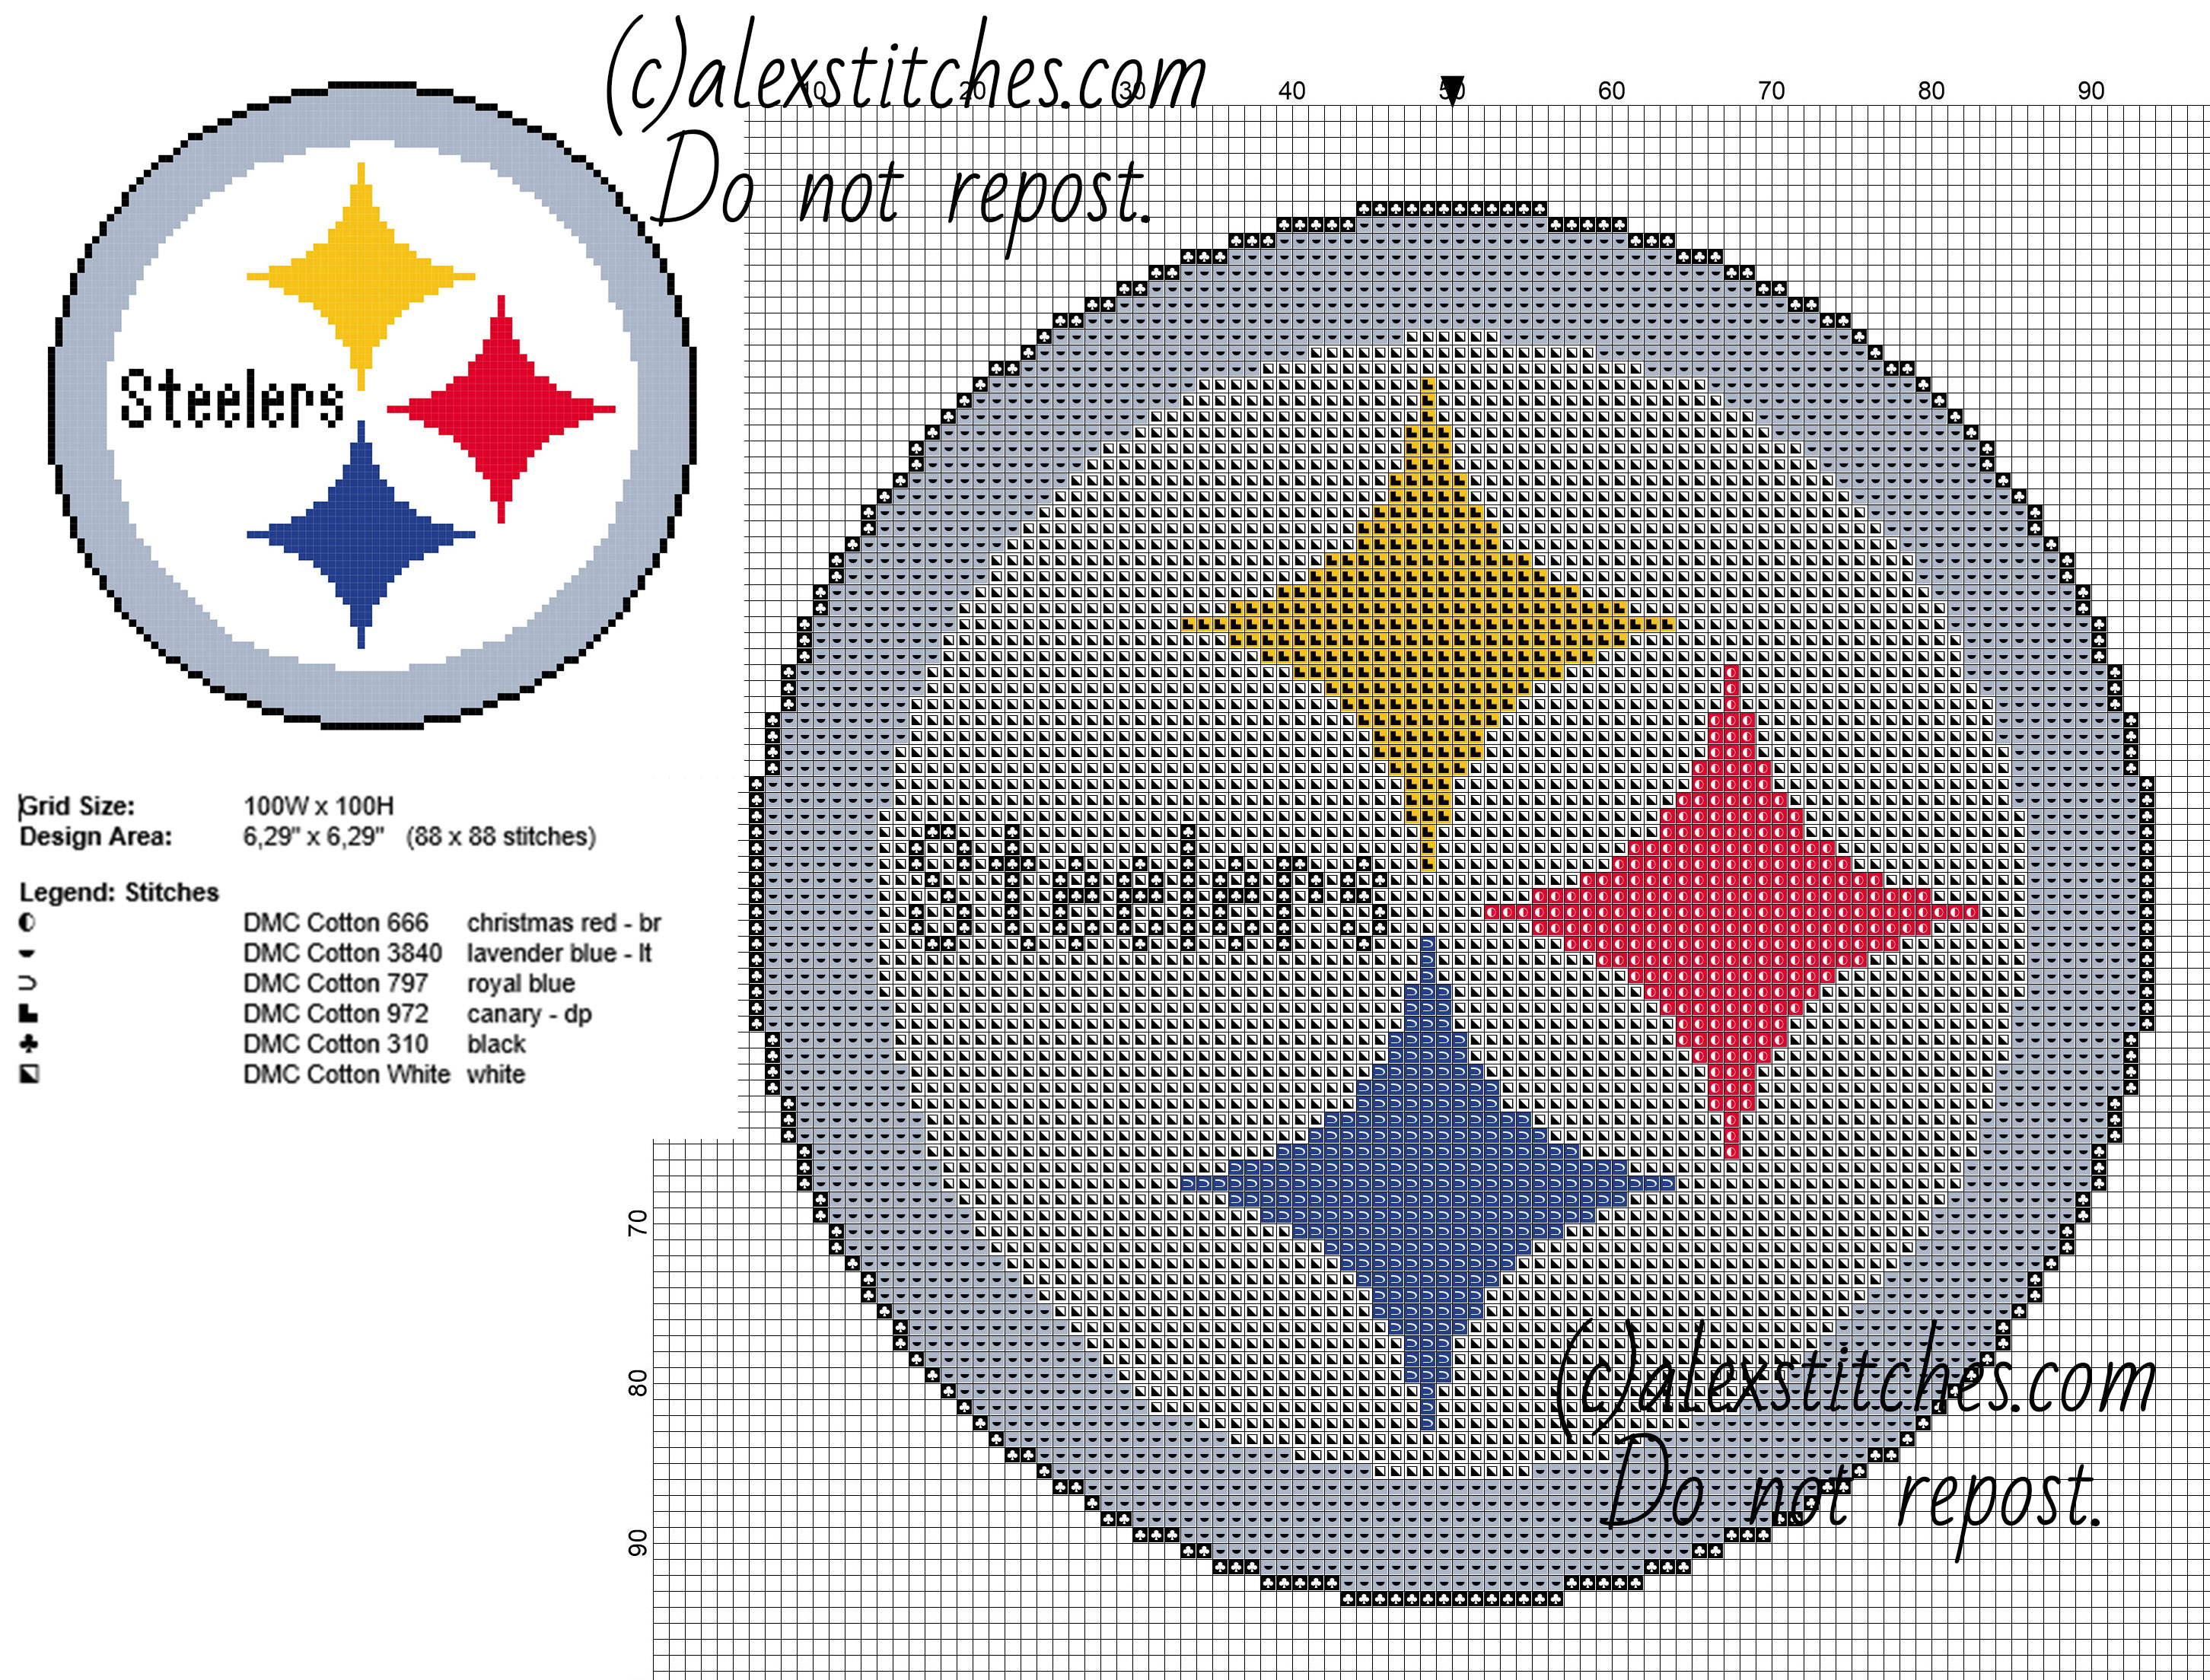 Pittsburg Steelers logo NFL National Football League team free cross stitch pattern